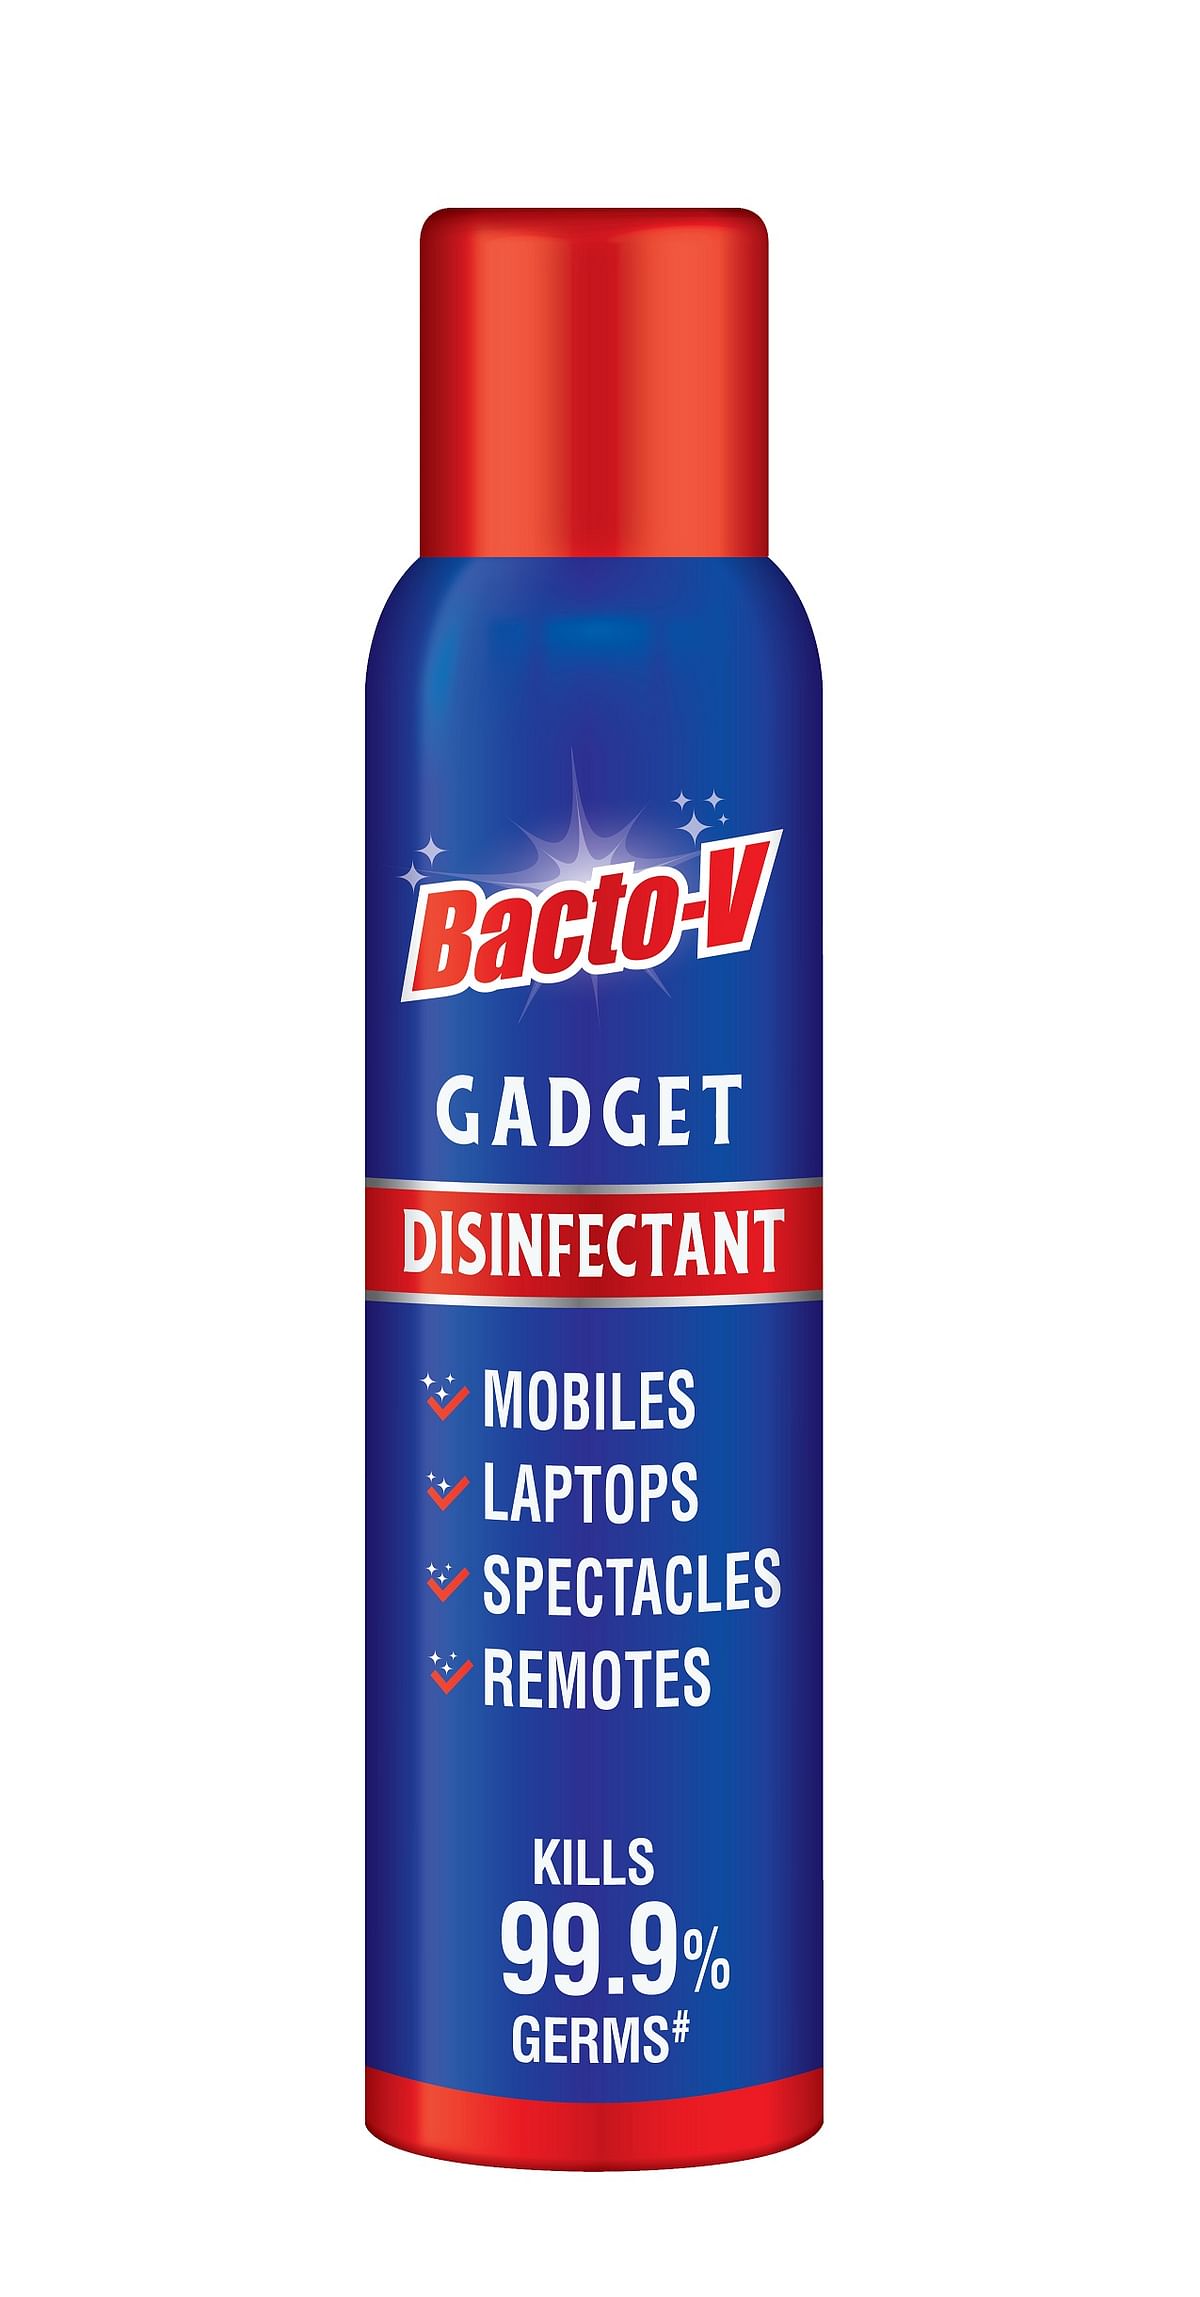 Bacto-V Gadget Disinfectant